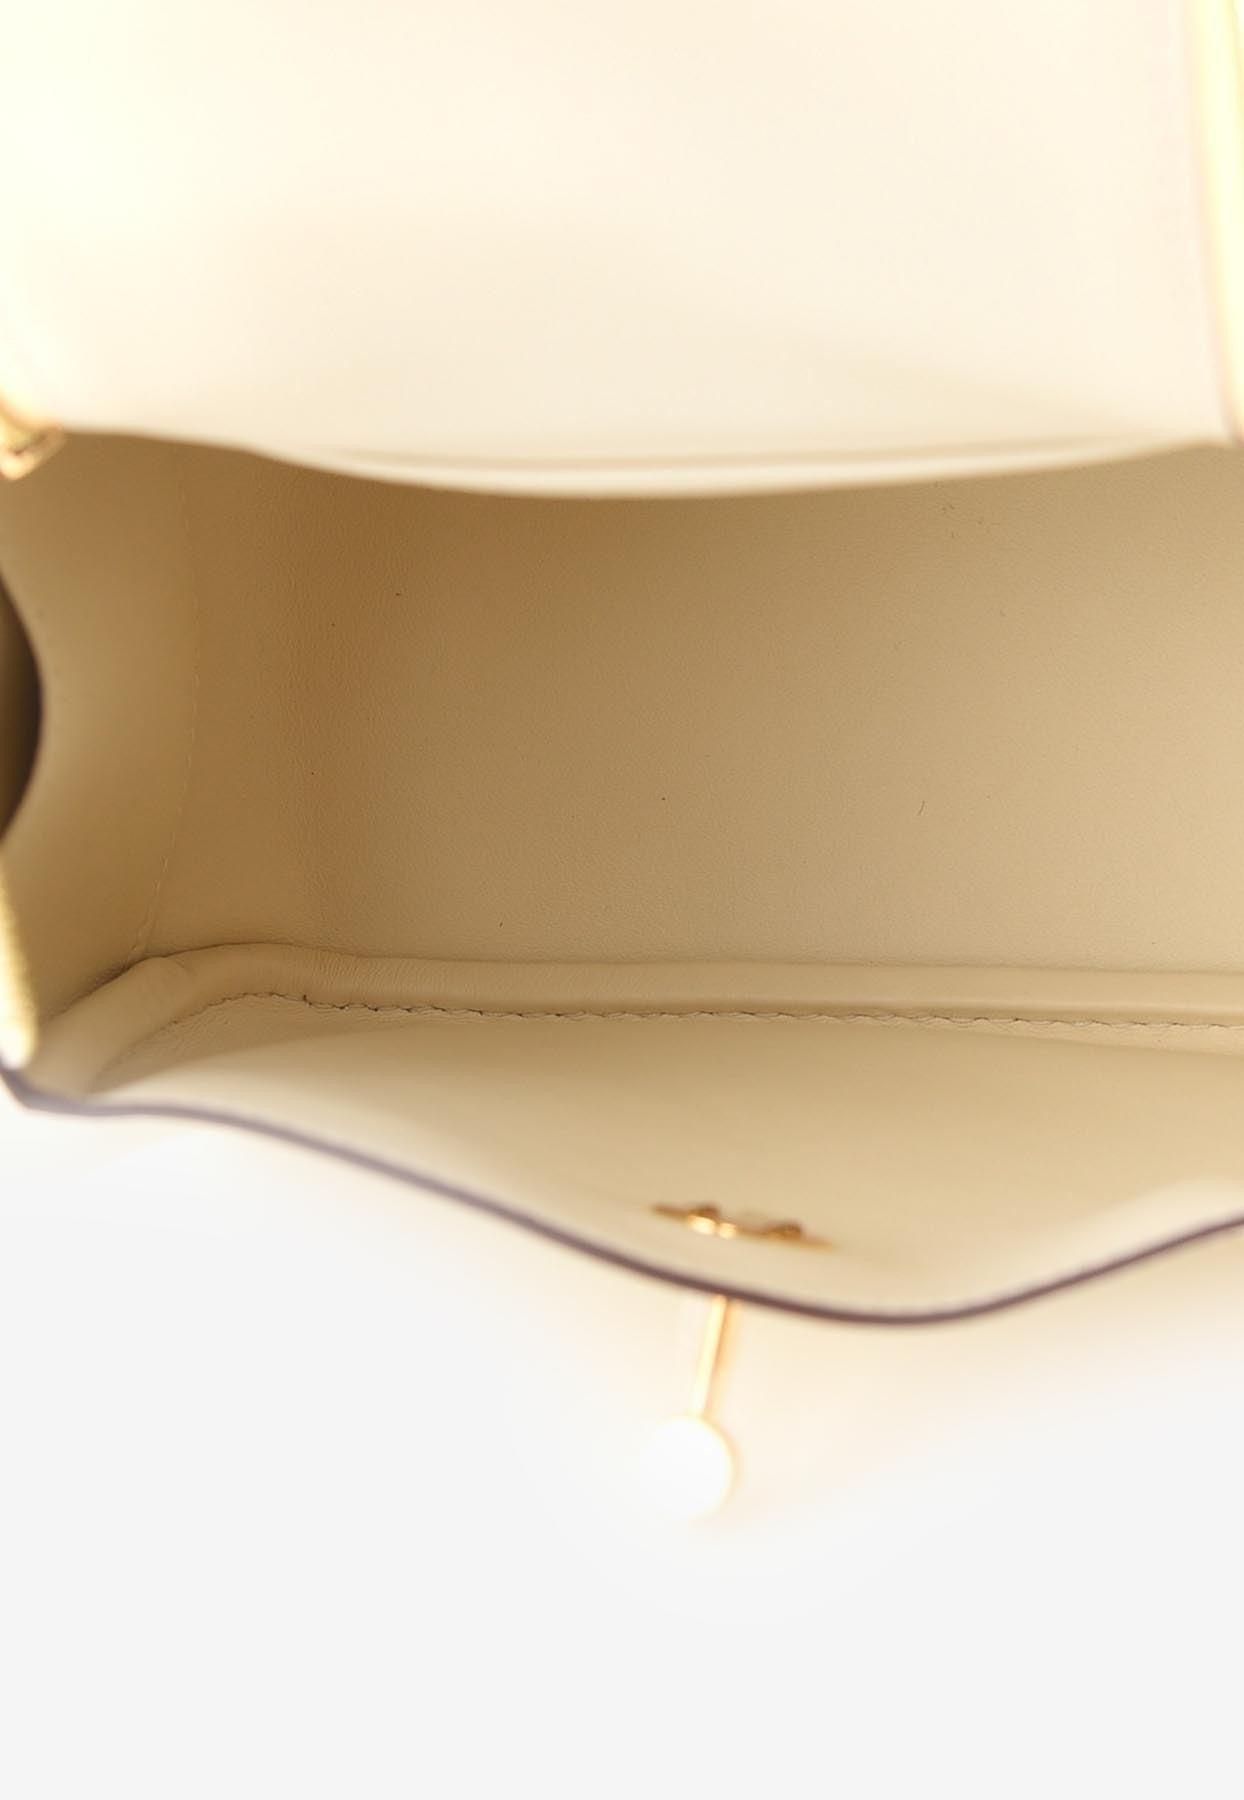 Hermès Nata/Lime Swift Leather Palladium Finish Mini Lindy Bag